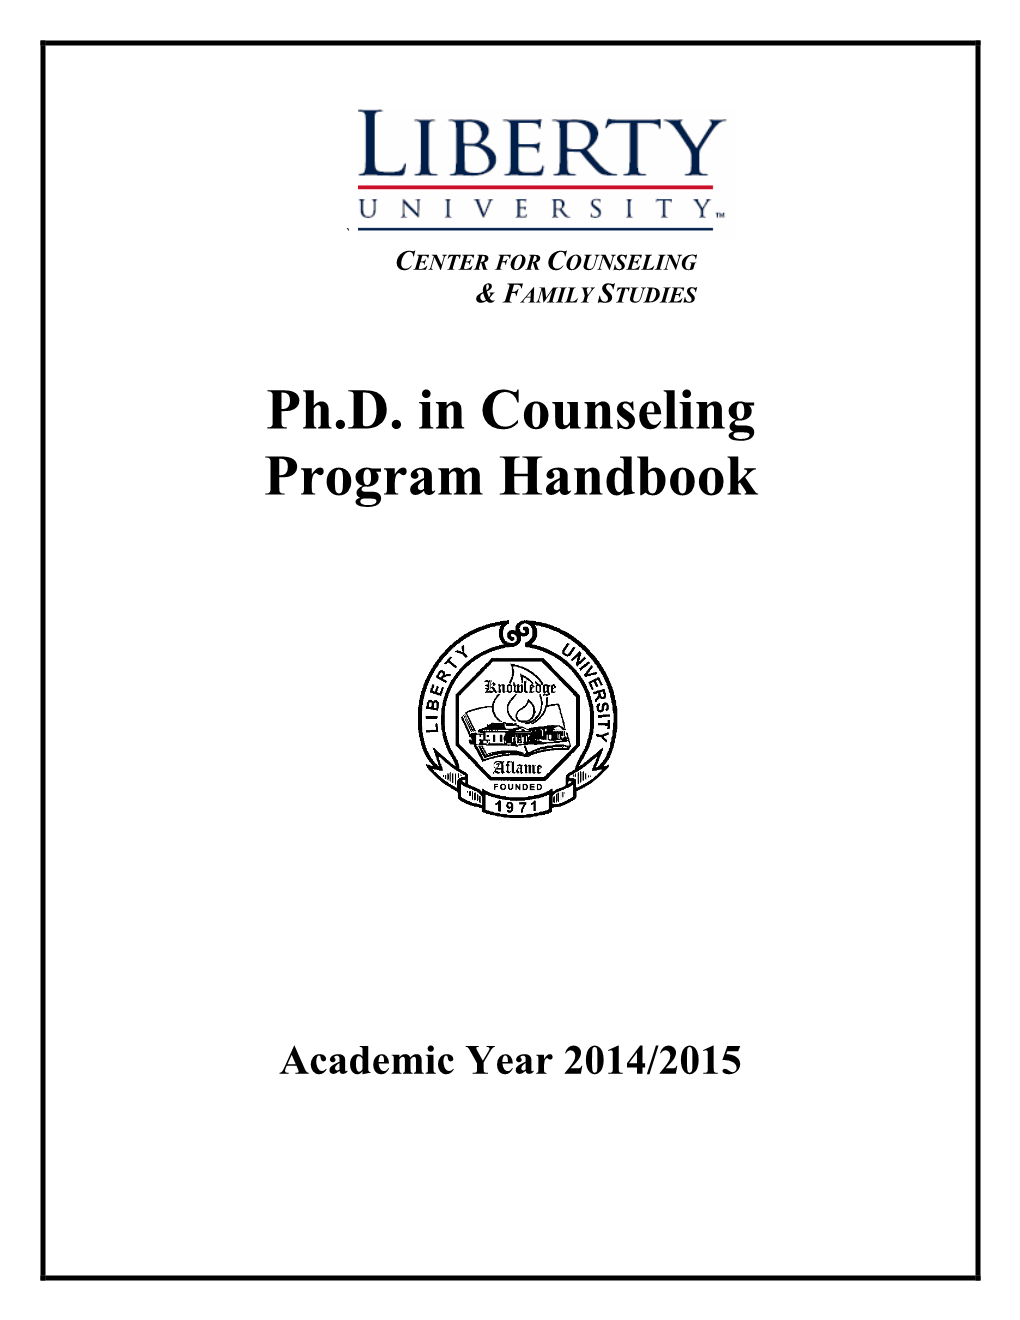 Ph.D. in Counseling Program Handbook